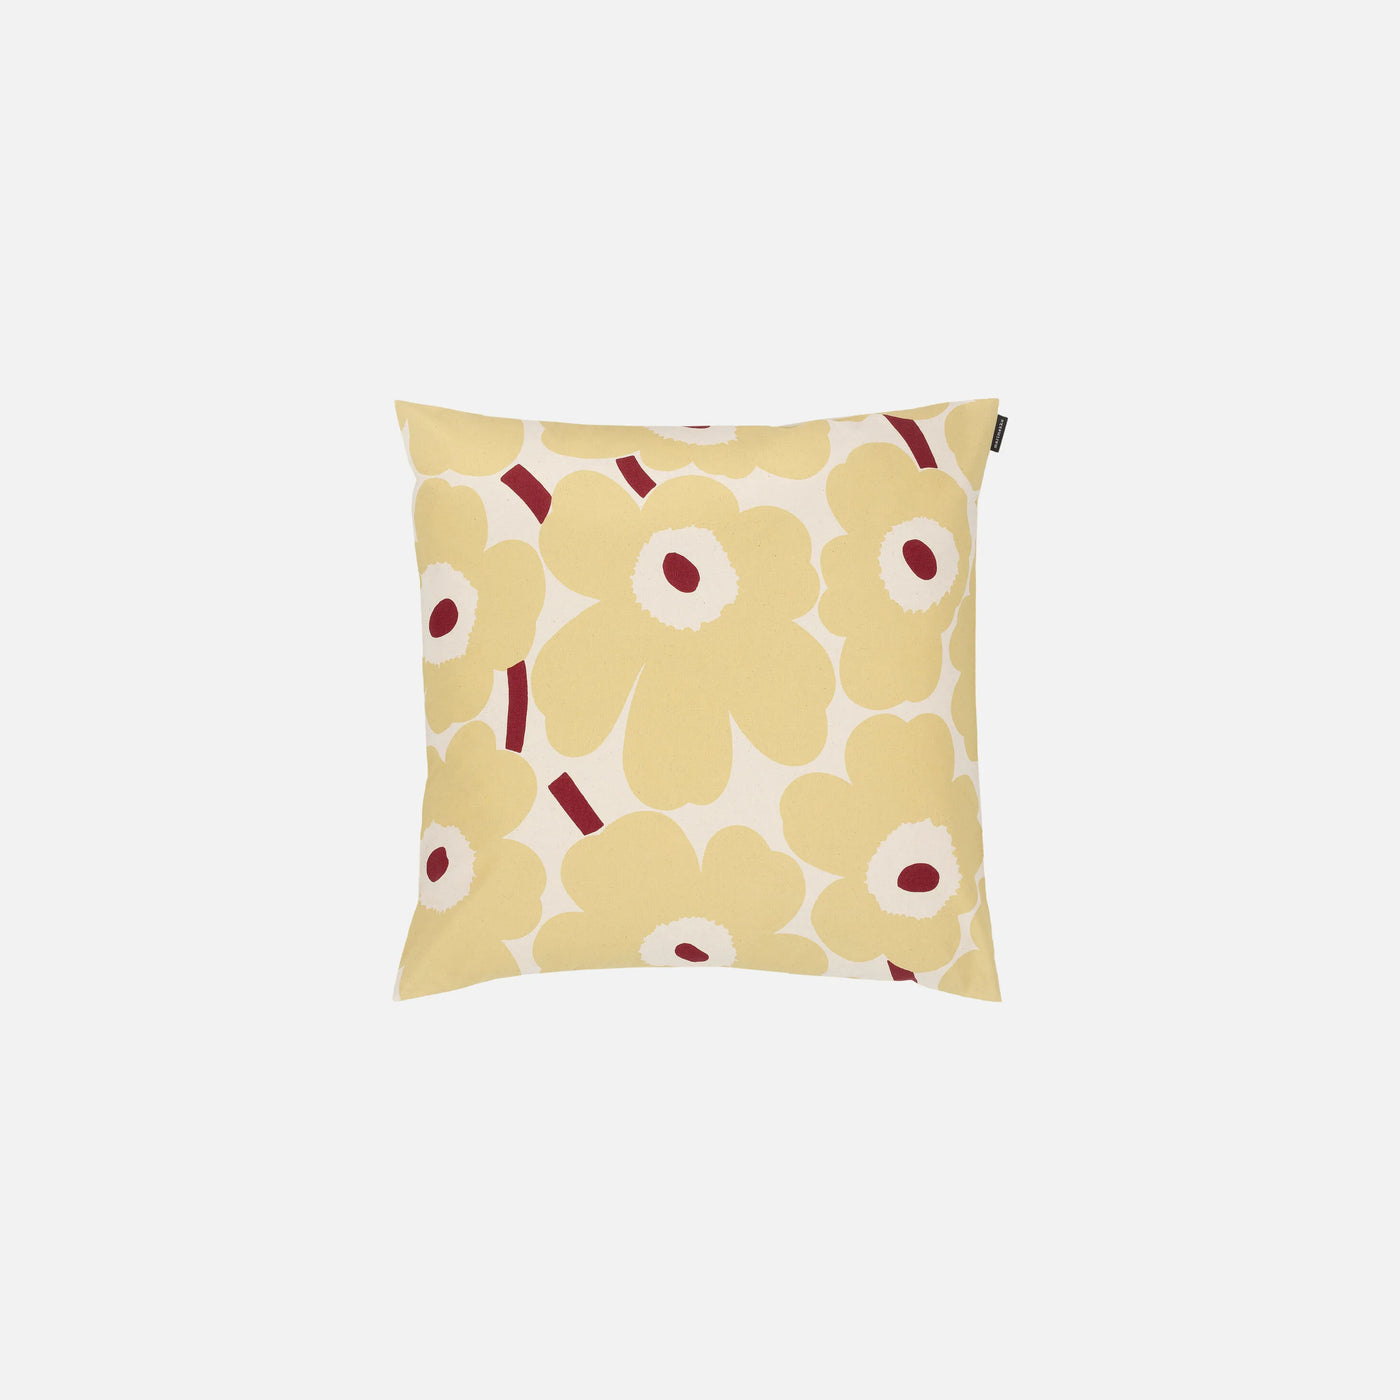 Pieni Unikko Cushion Cover 50x50 Cm - butter yellow